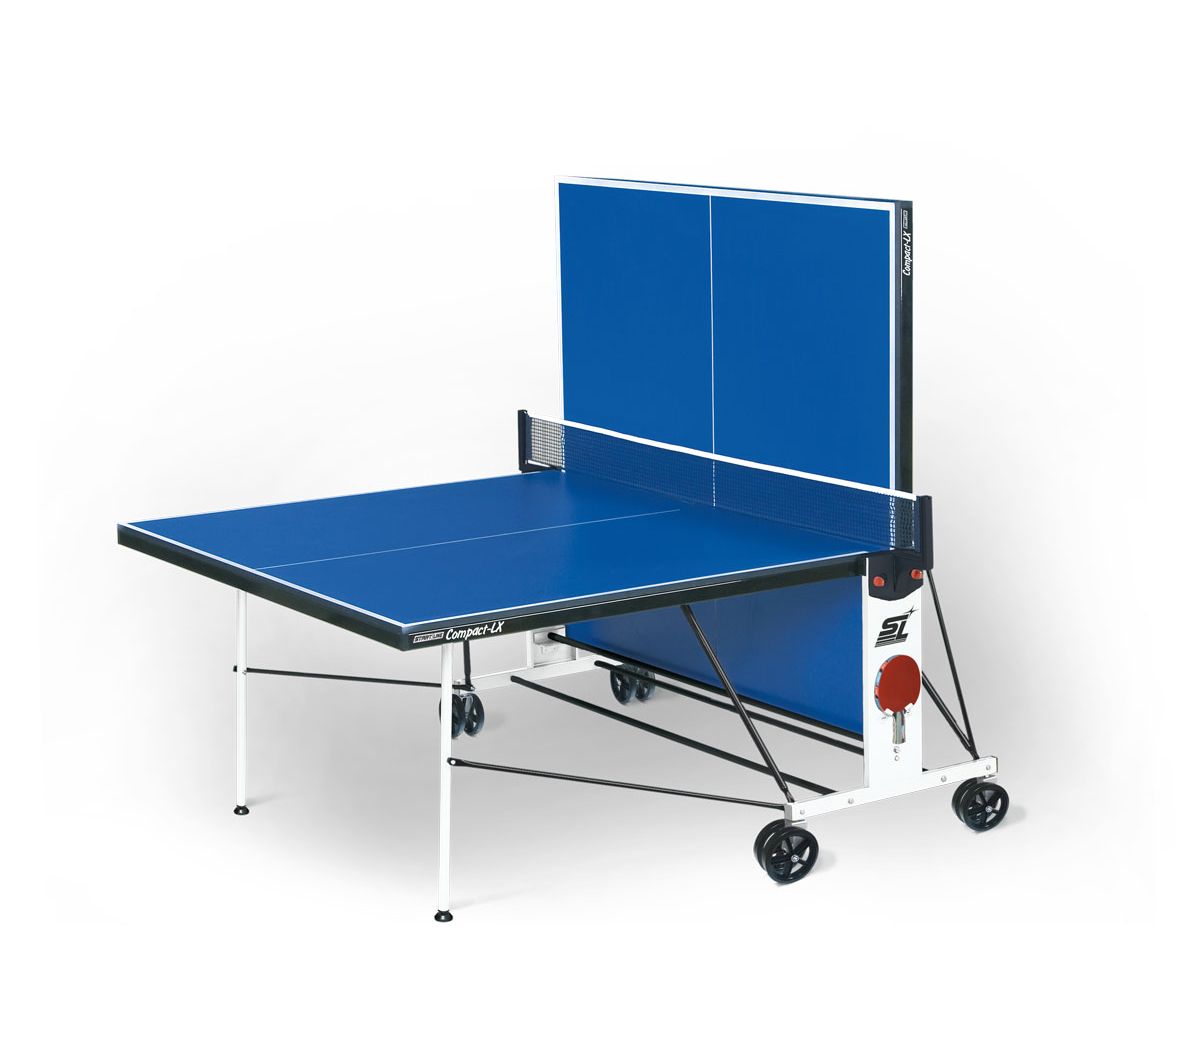 размер теннисного стола для настольного тенниса для дома